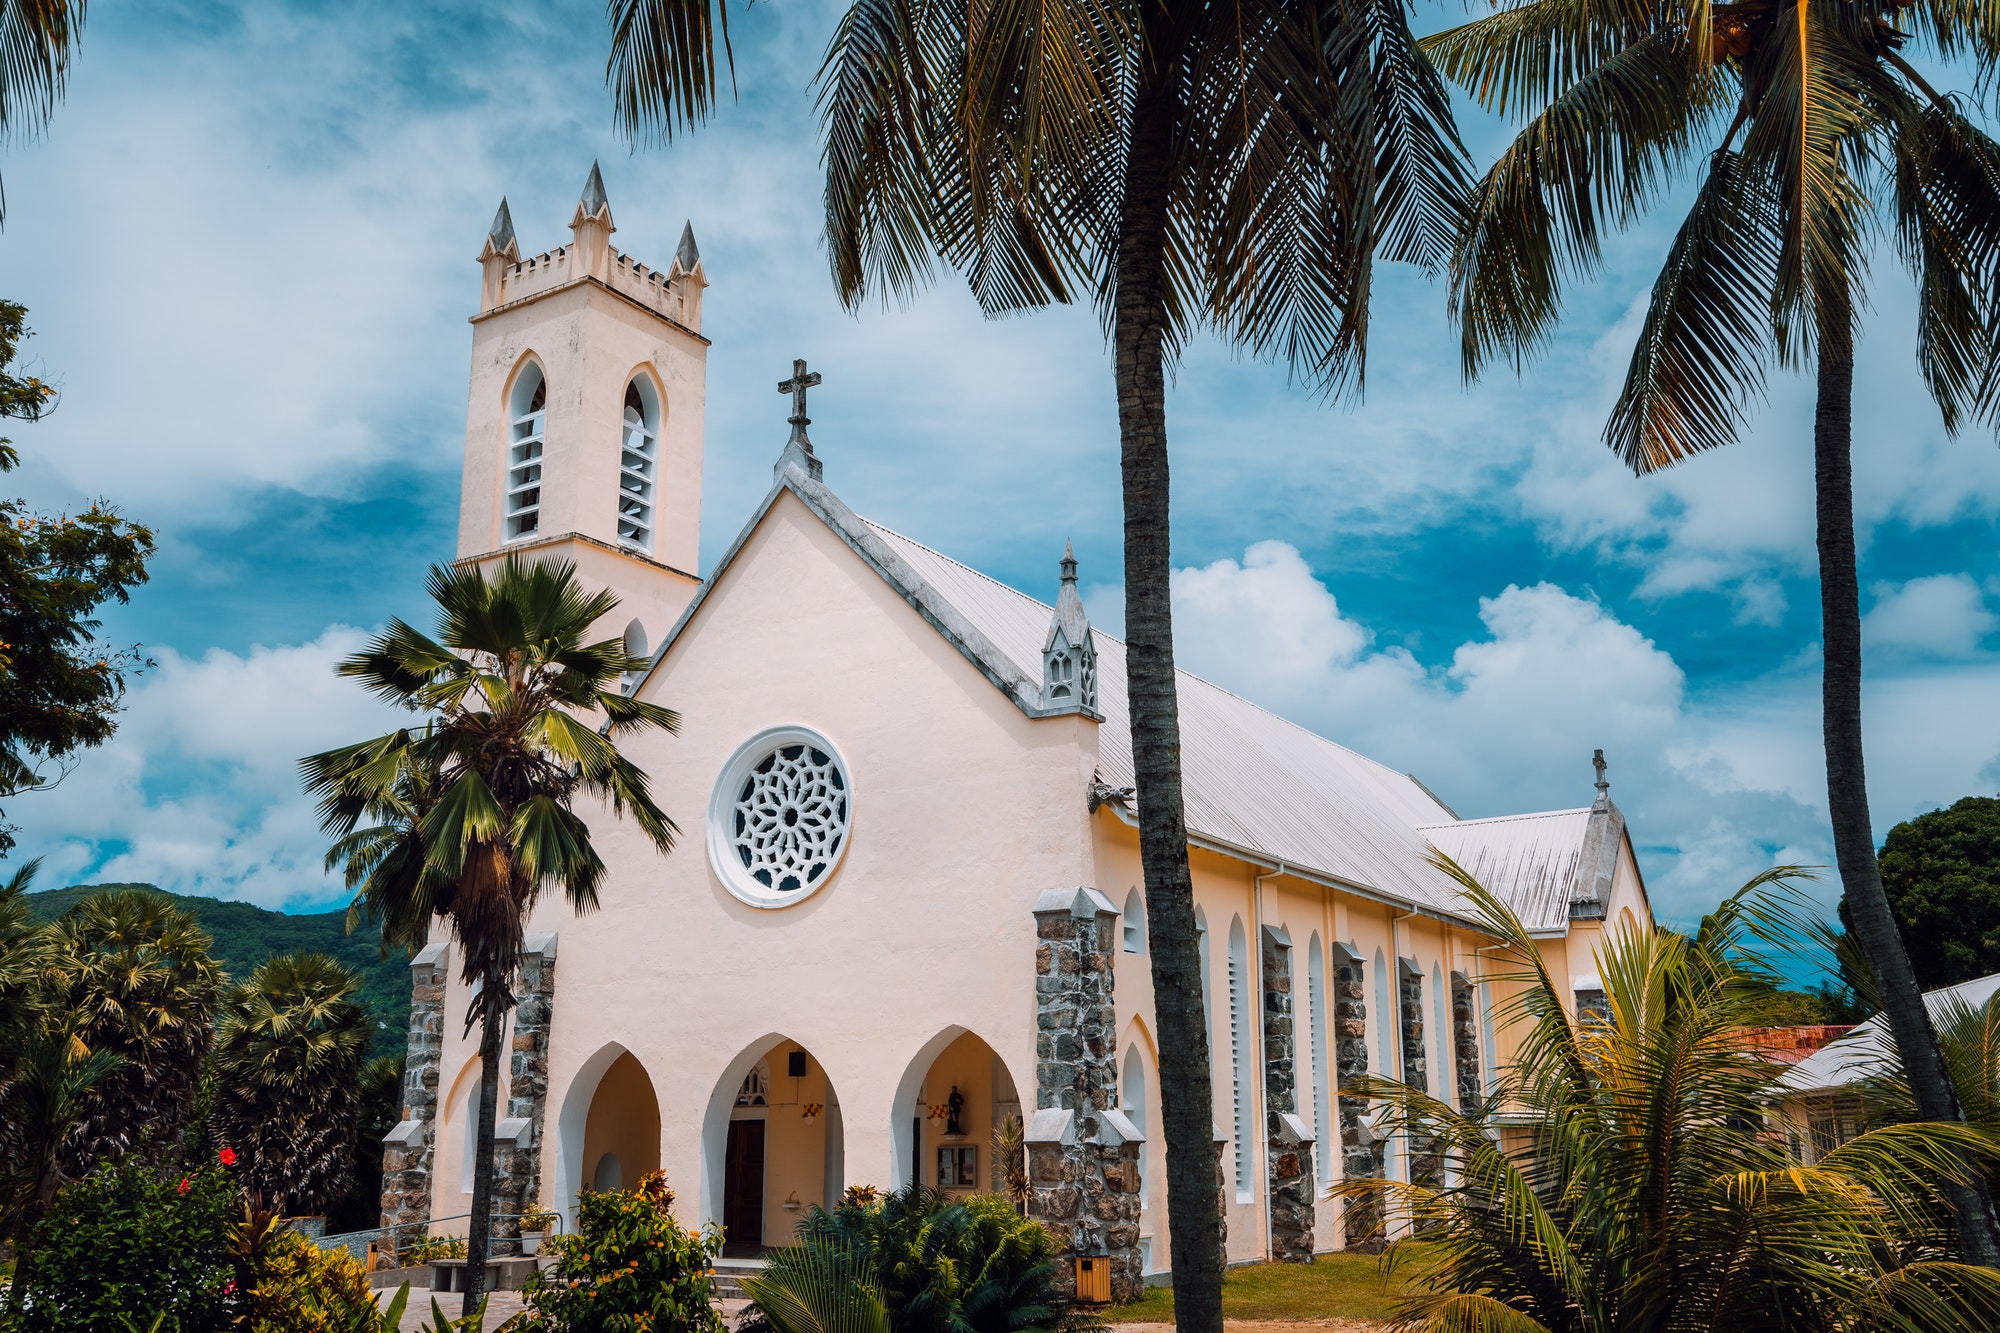 St. Roch Roman Catholic Church in the small location Beau Vallon, Mahe Island, Seychelles